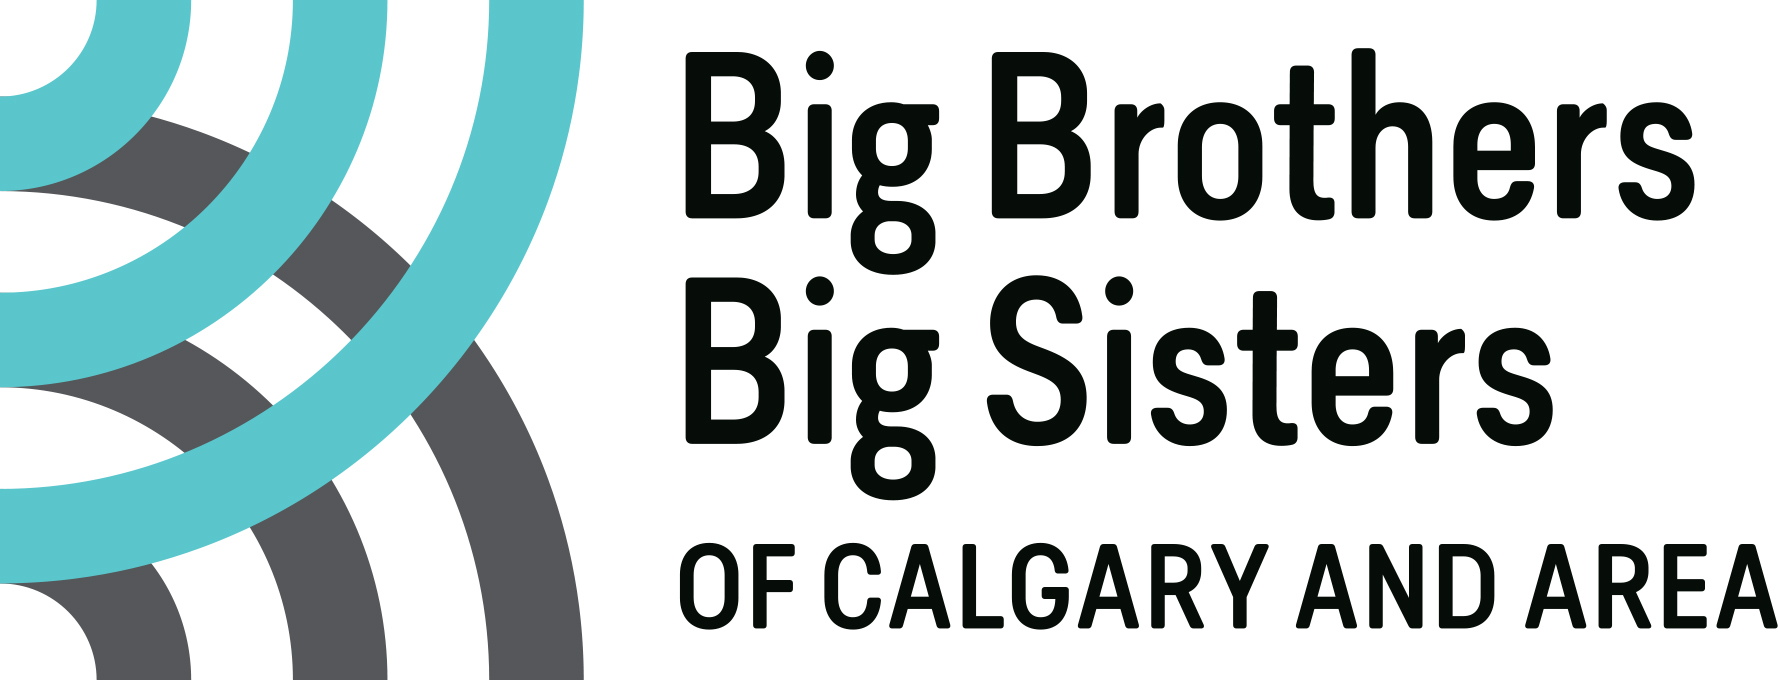 Big Brothers and Big Sisters of Calgary